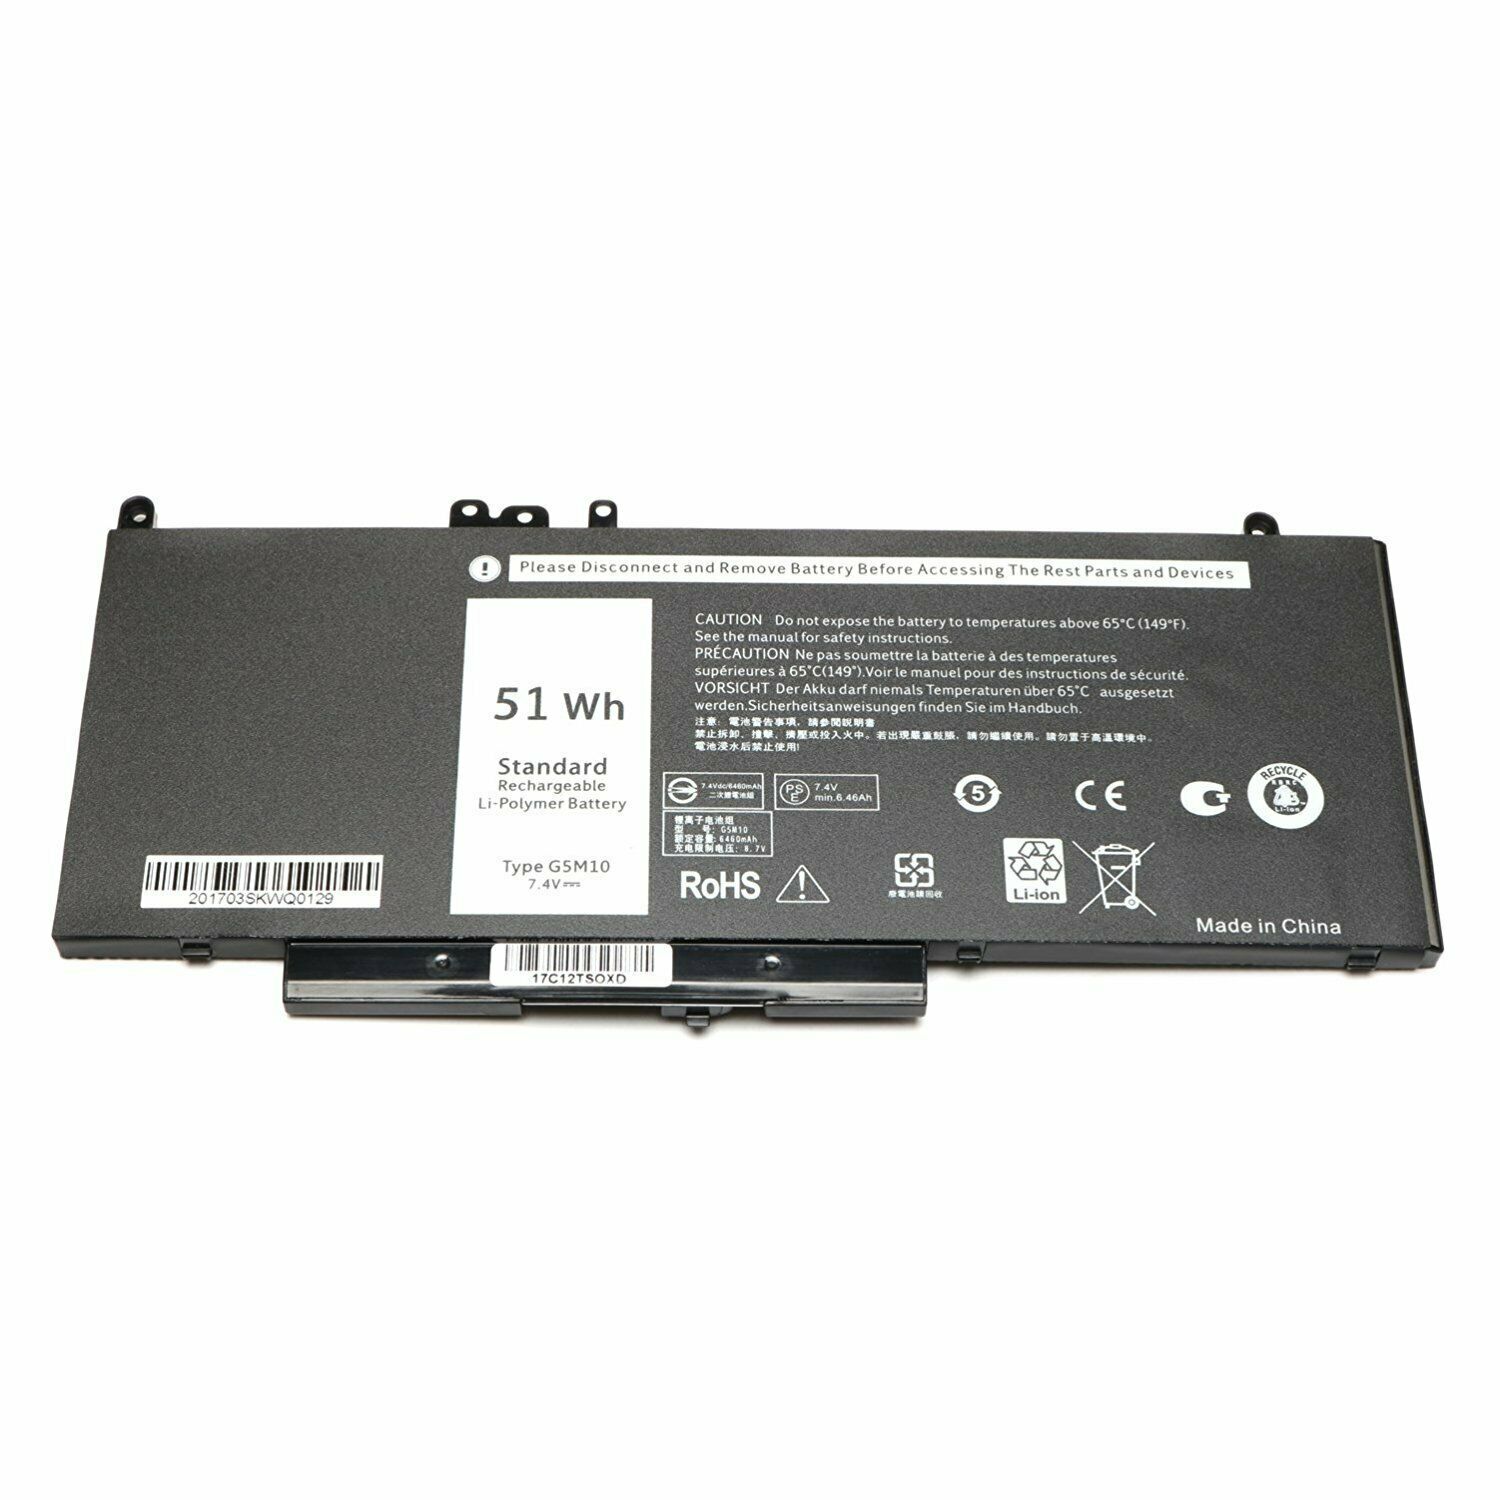 Batería para DELL LATITUDE E5250 E5270 E5450 E5470 E5550 E5570 G5M10 WYJC2 F5WW5(compatible)